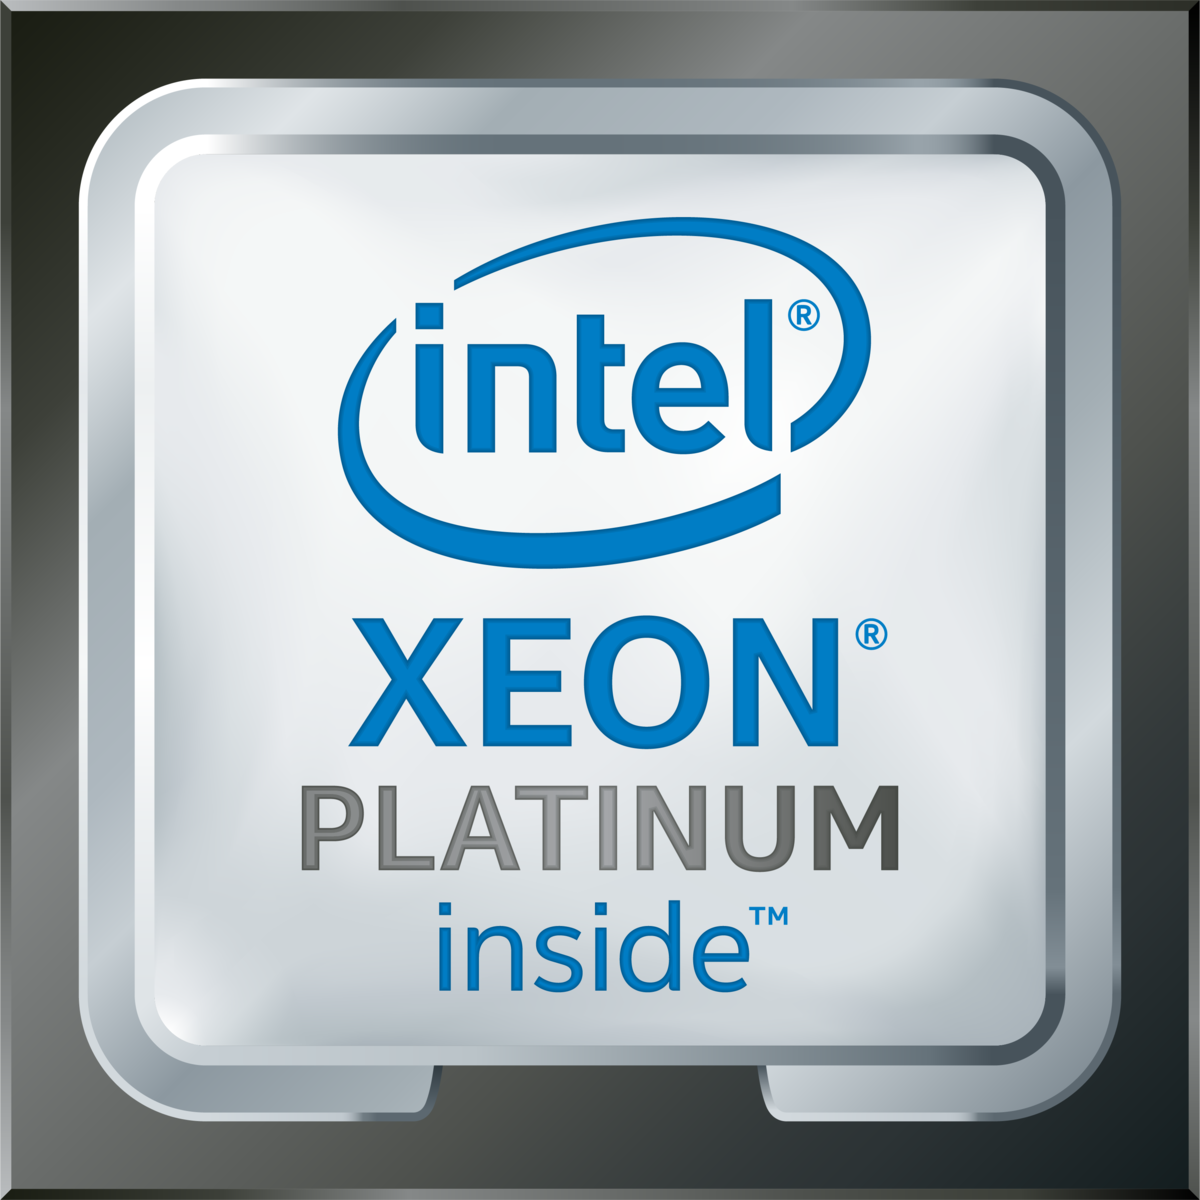 Intel(R) Xeon(R) Platinum 8259CL CPU @ 2.50GHz's logo